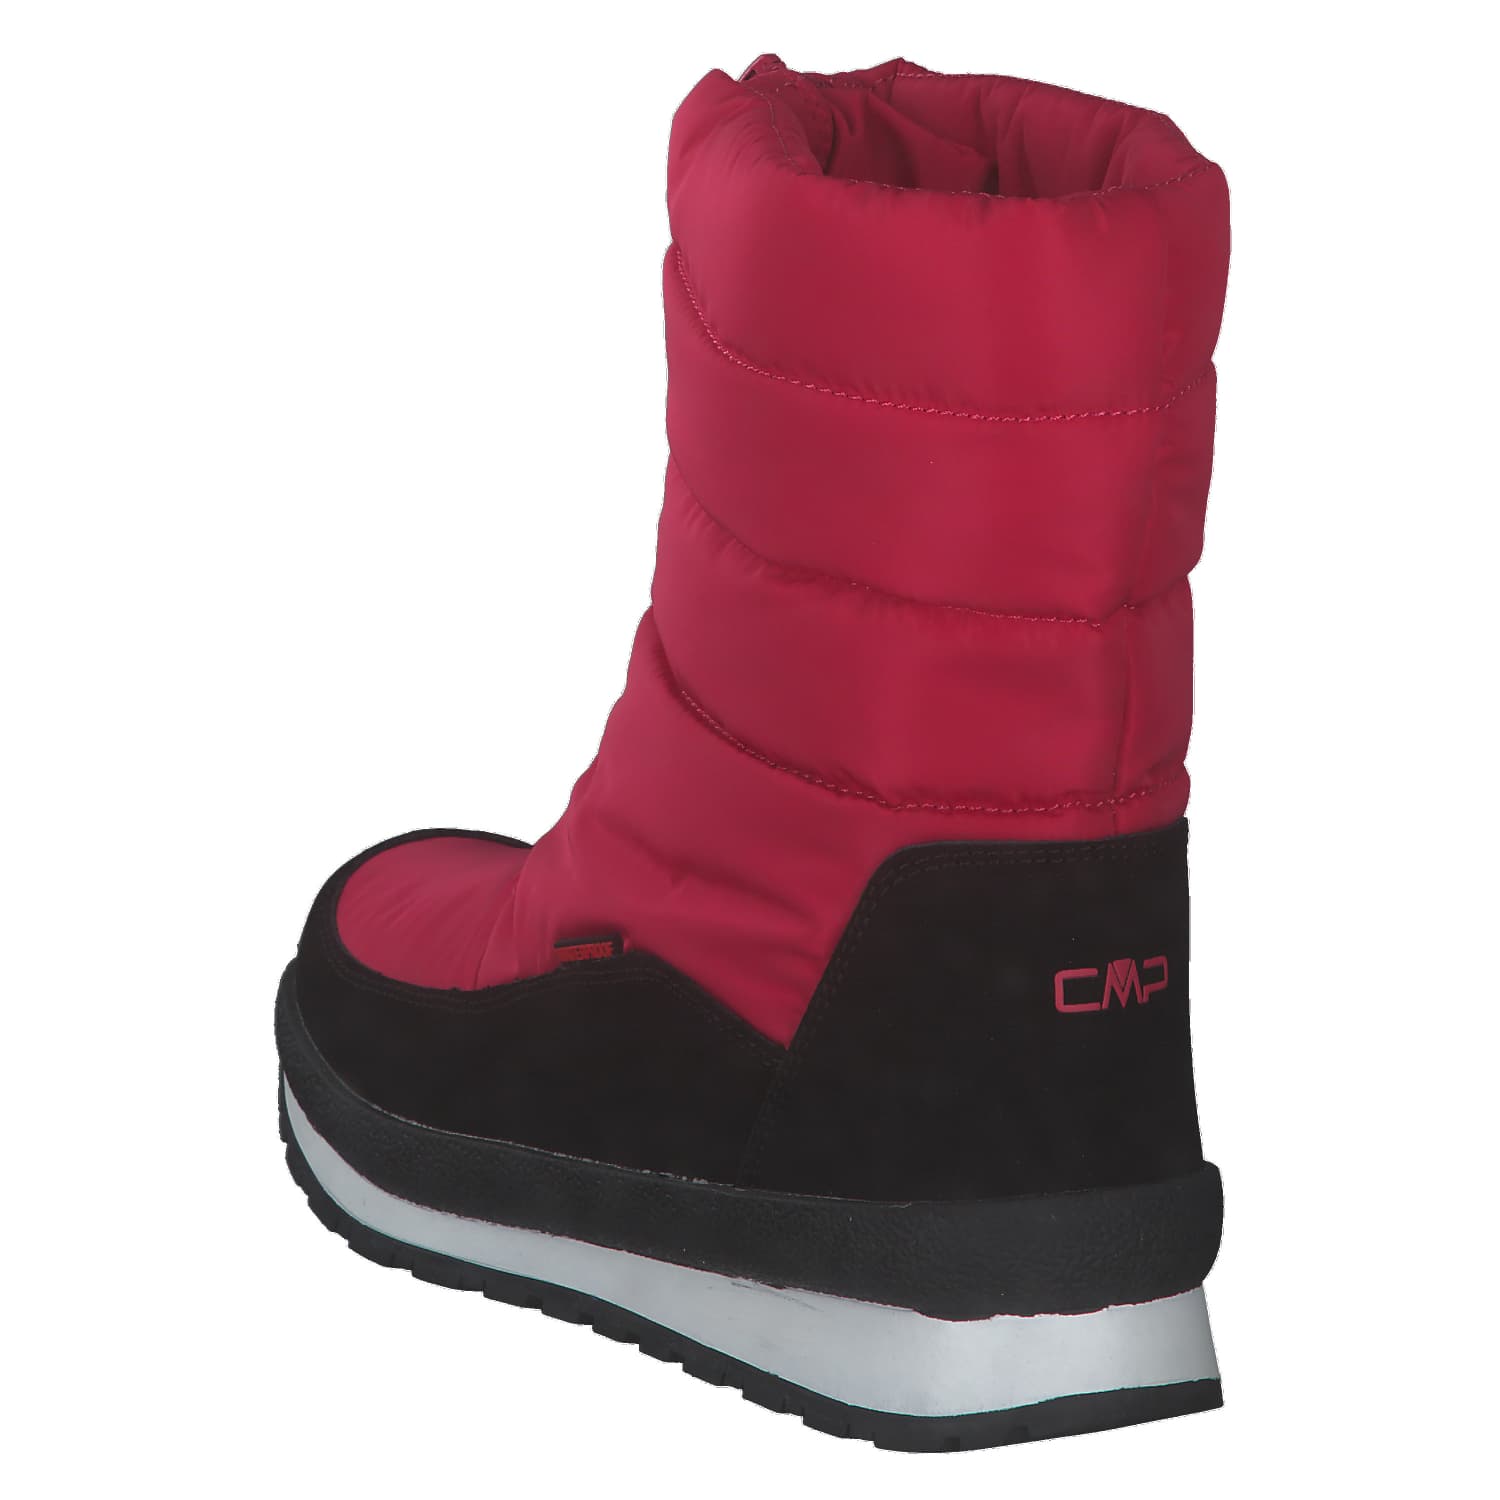 CMP Kinder Winterstiefel Rae Snow Boots WP 39Q4964J | eBay